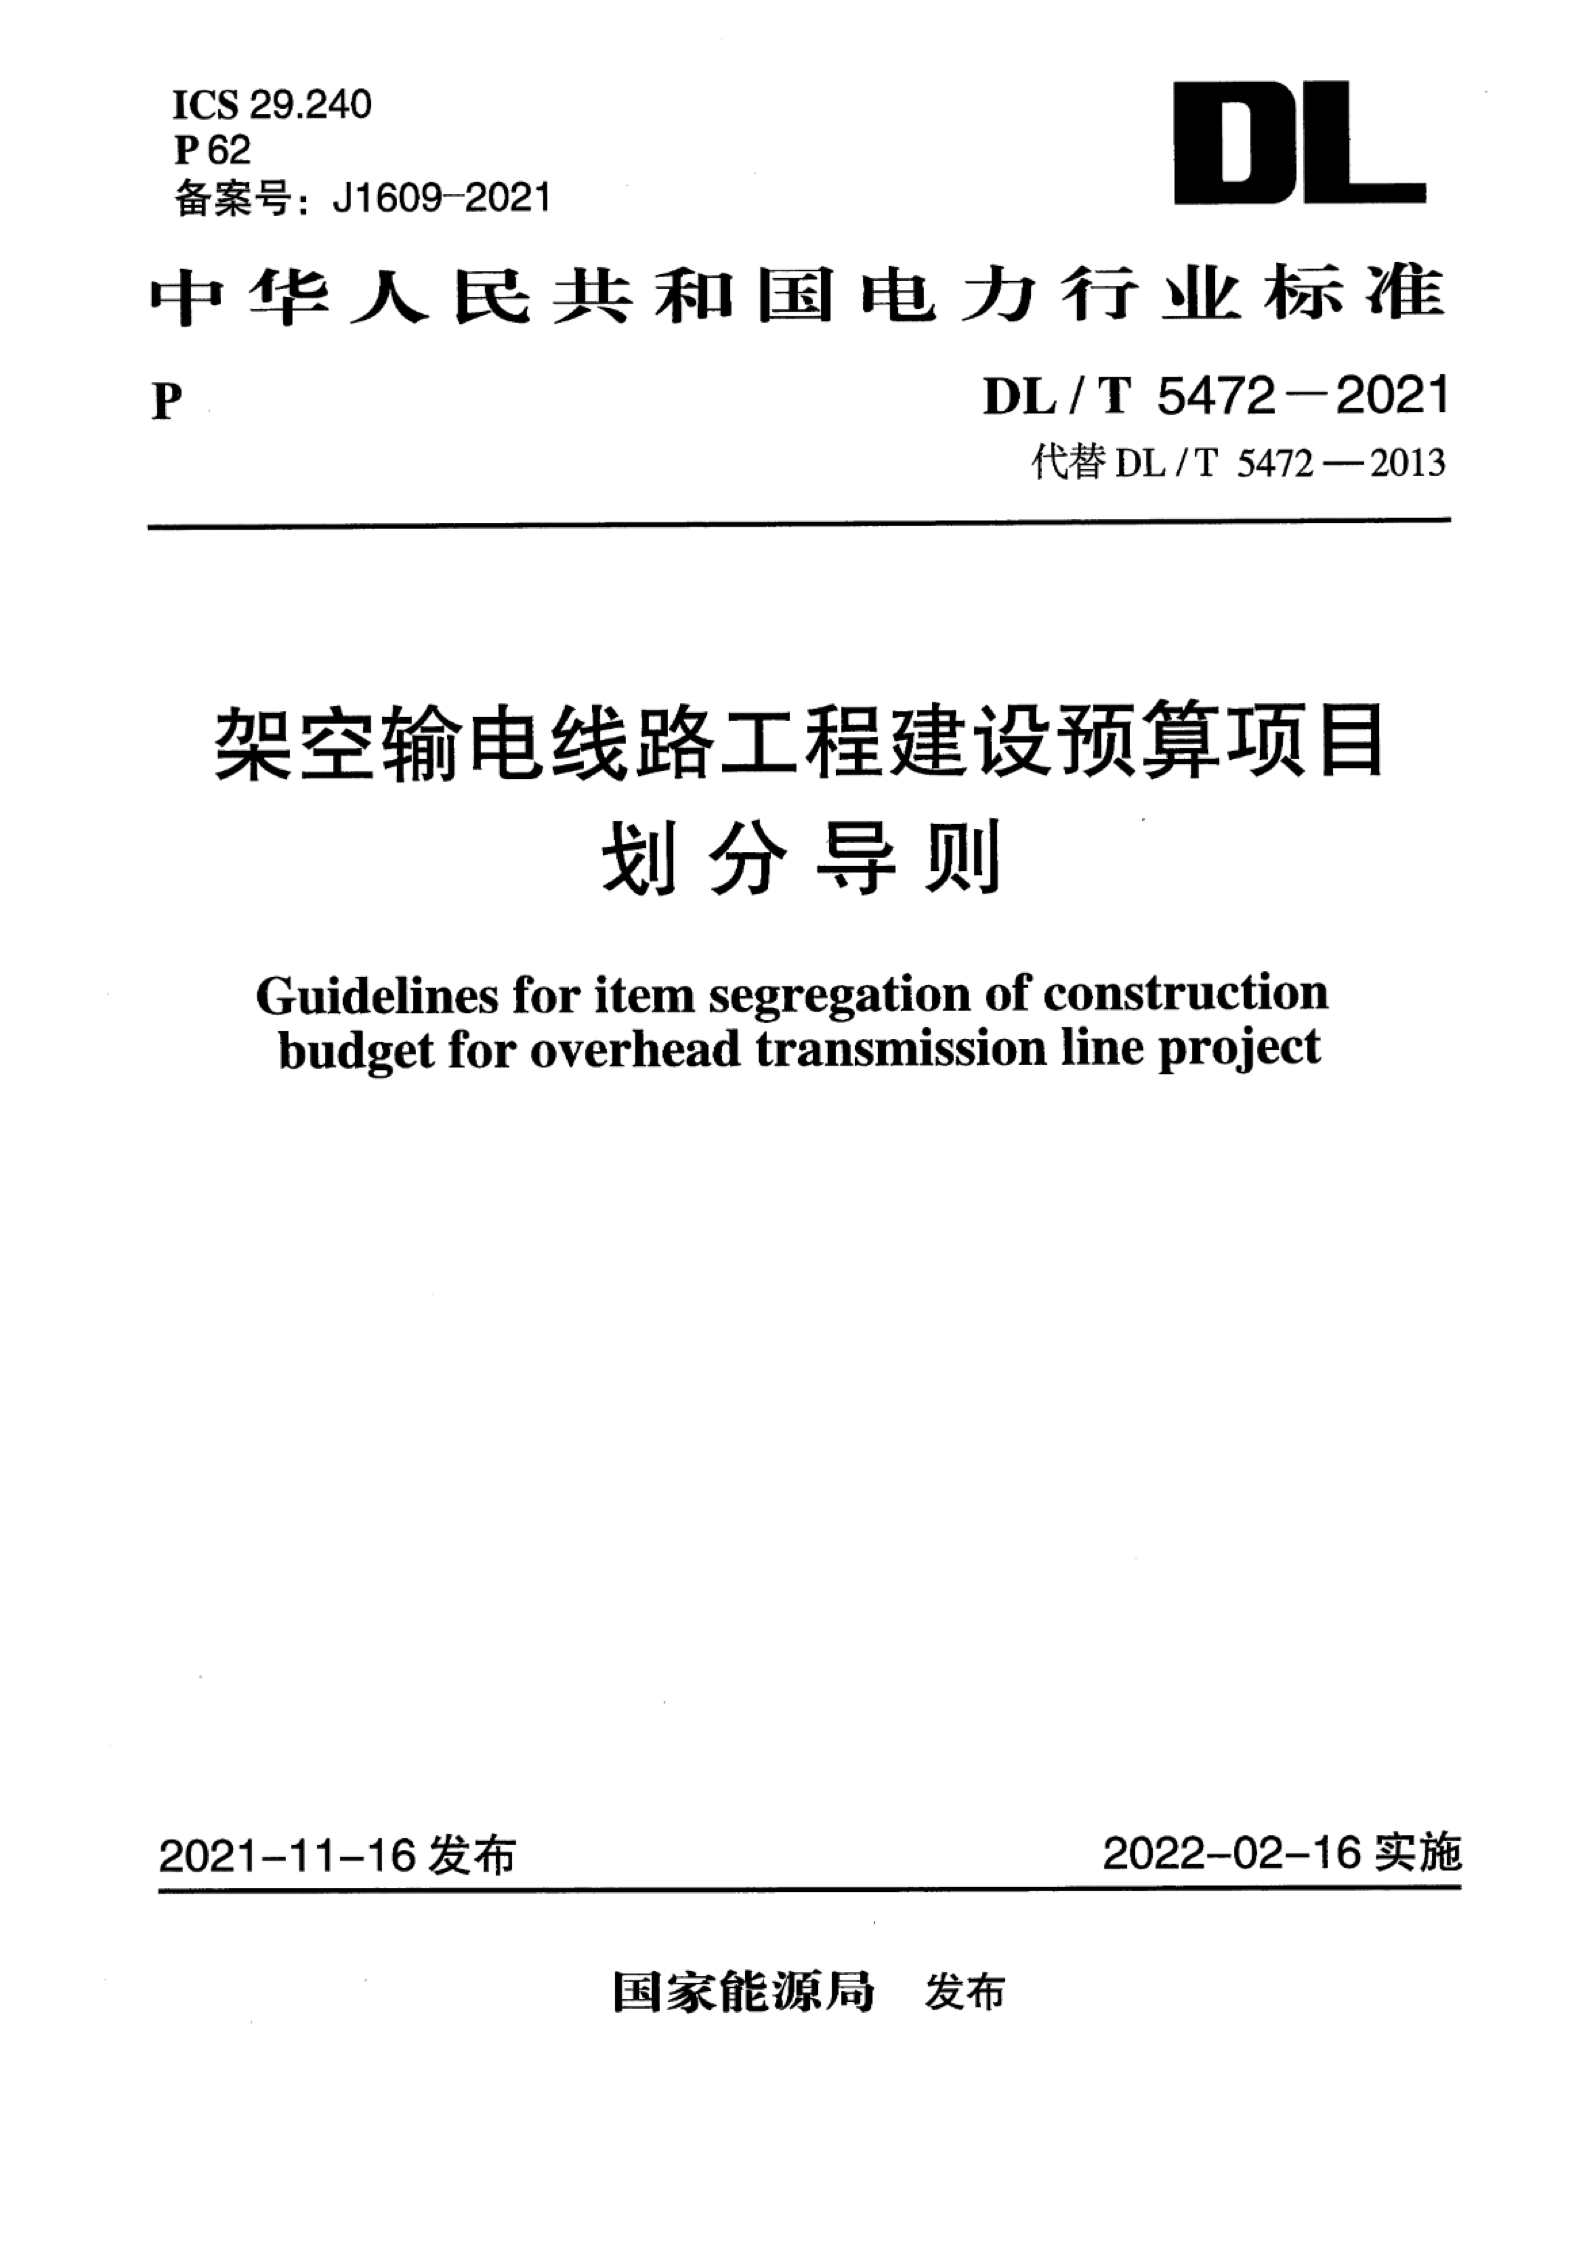 DL/T 5472-2021 架空输电线路工程建设预算项目划分导则